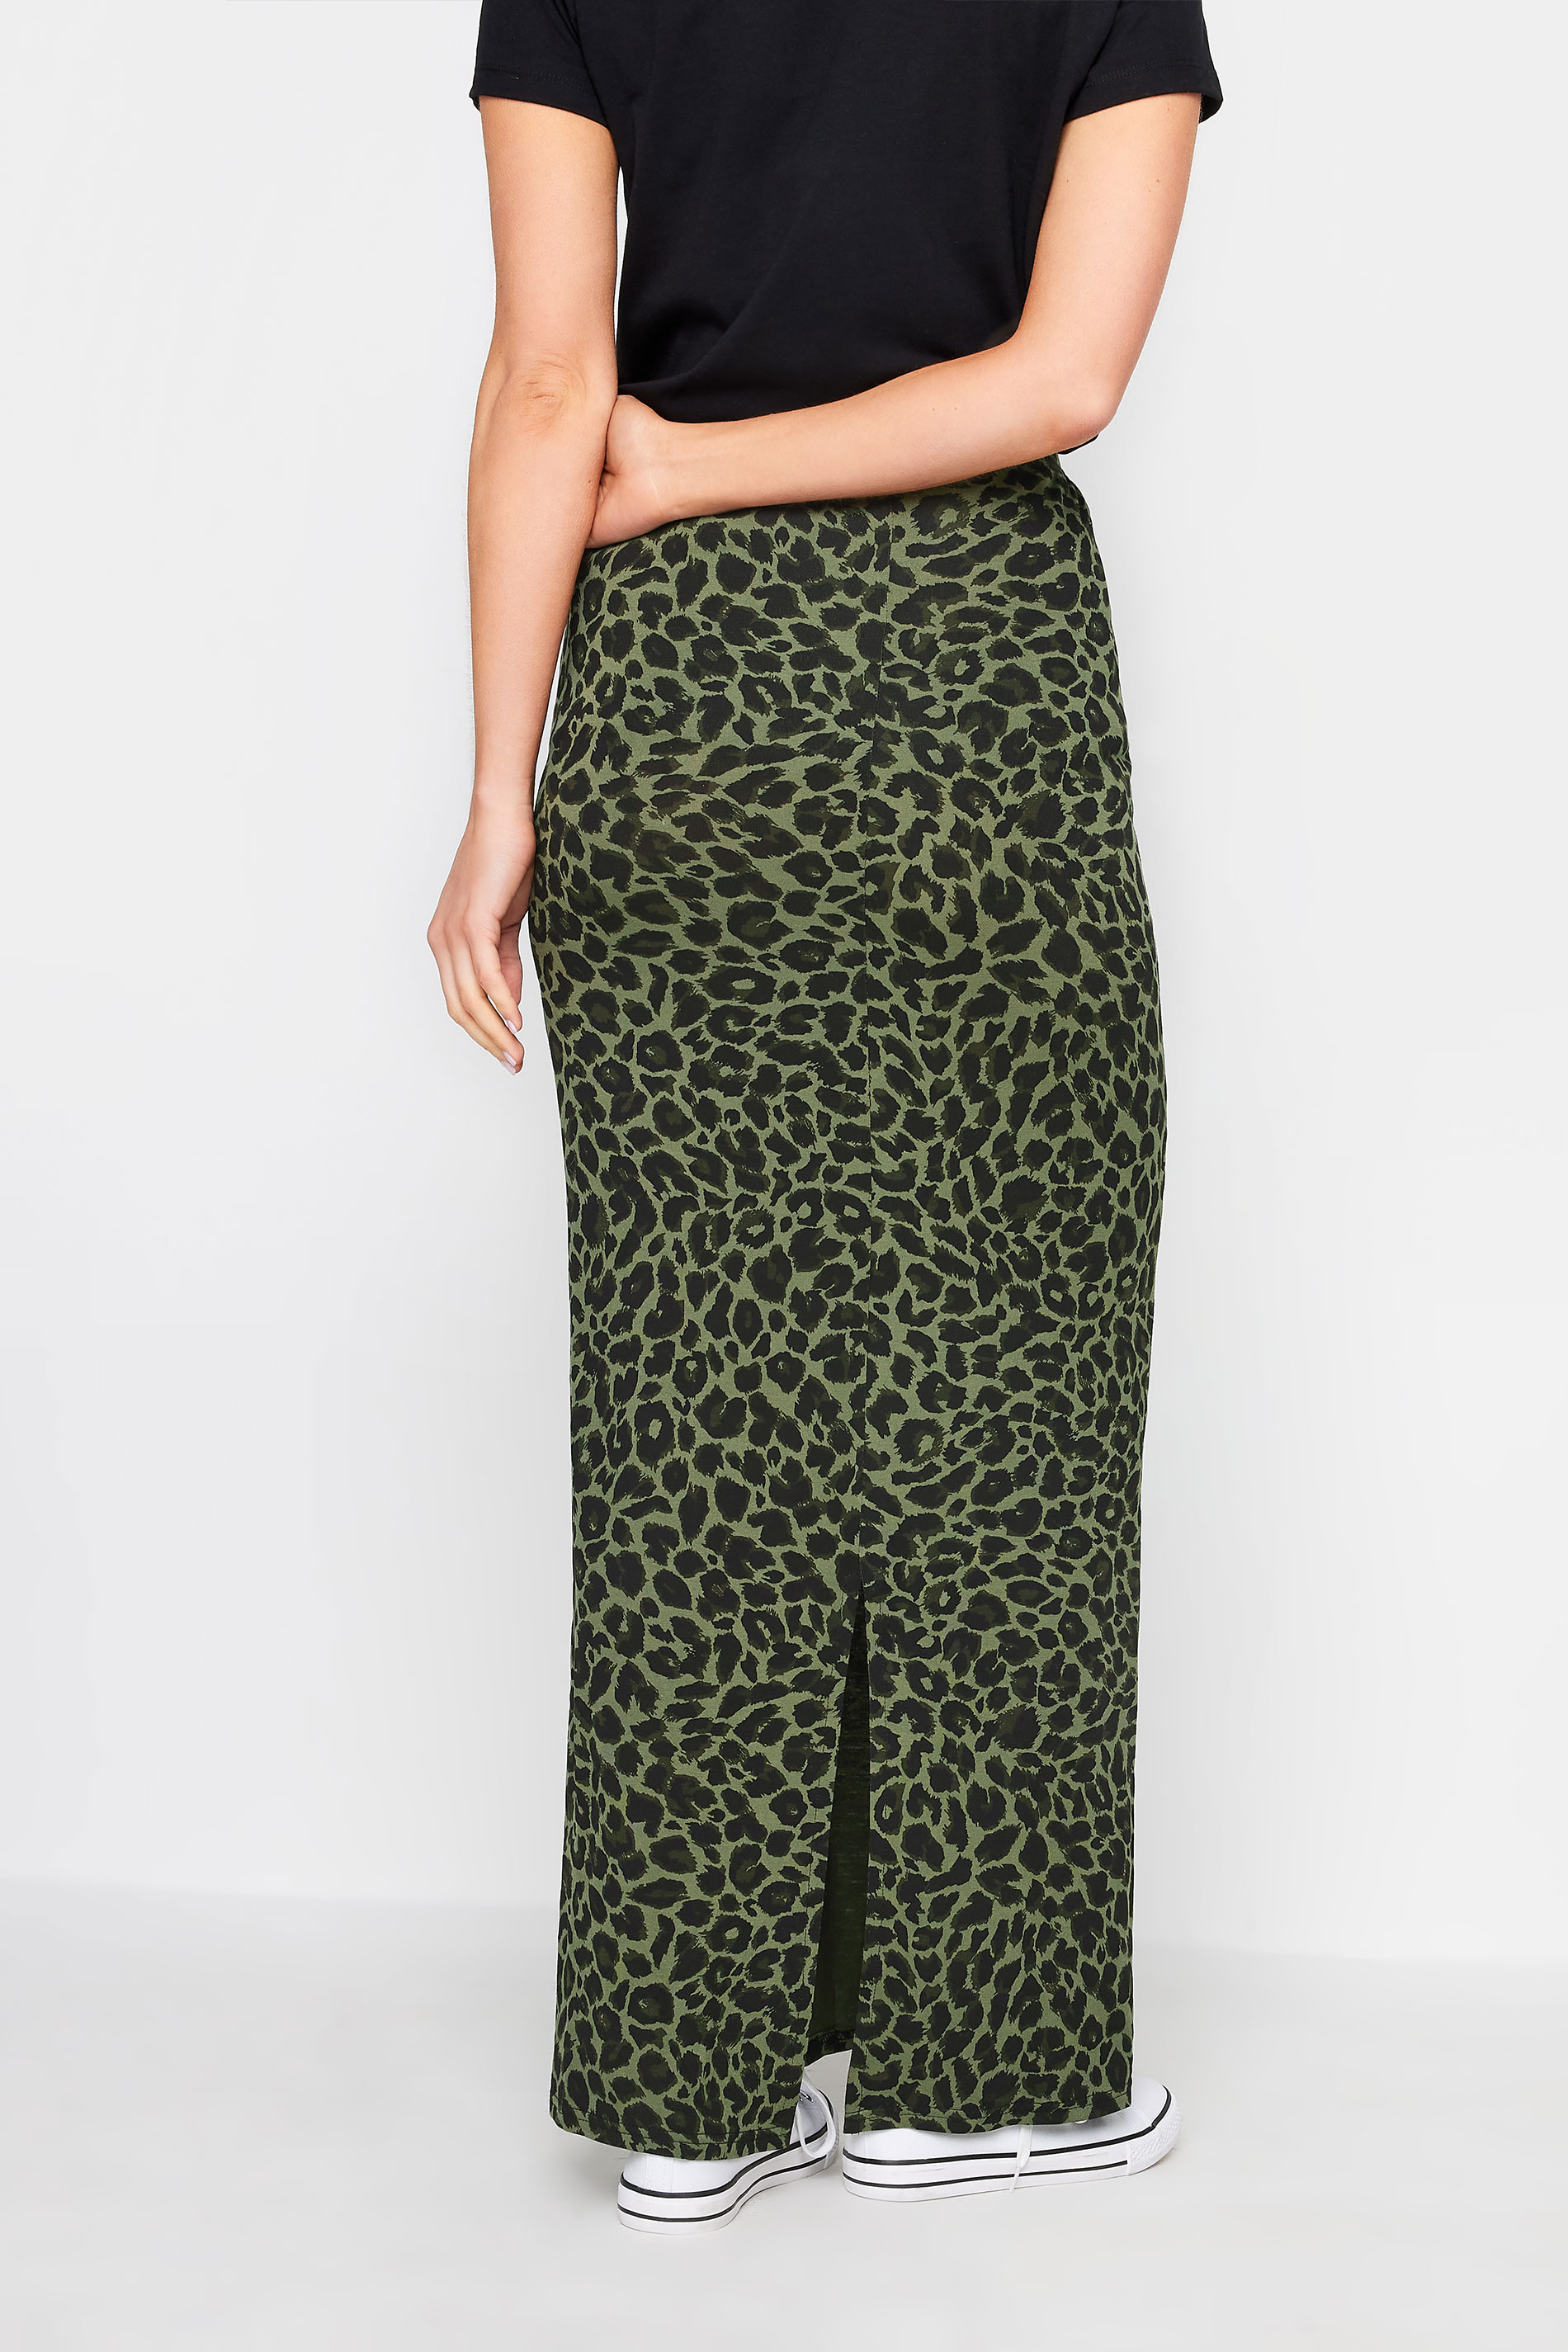 LTS Tall Khaki Green Animal Print Maxi Skirt | Long Tall Sally 3